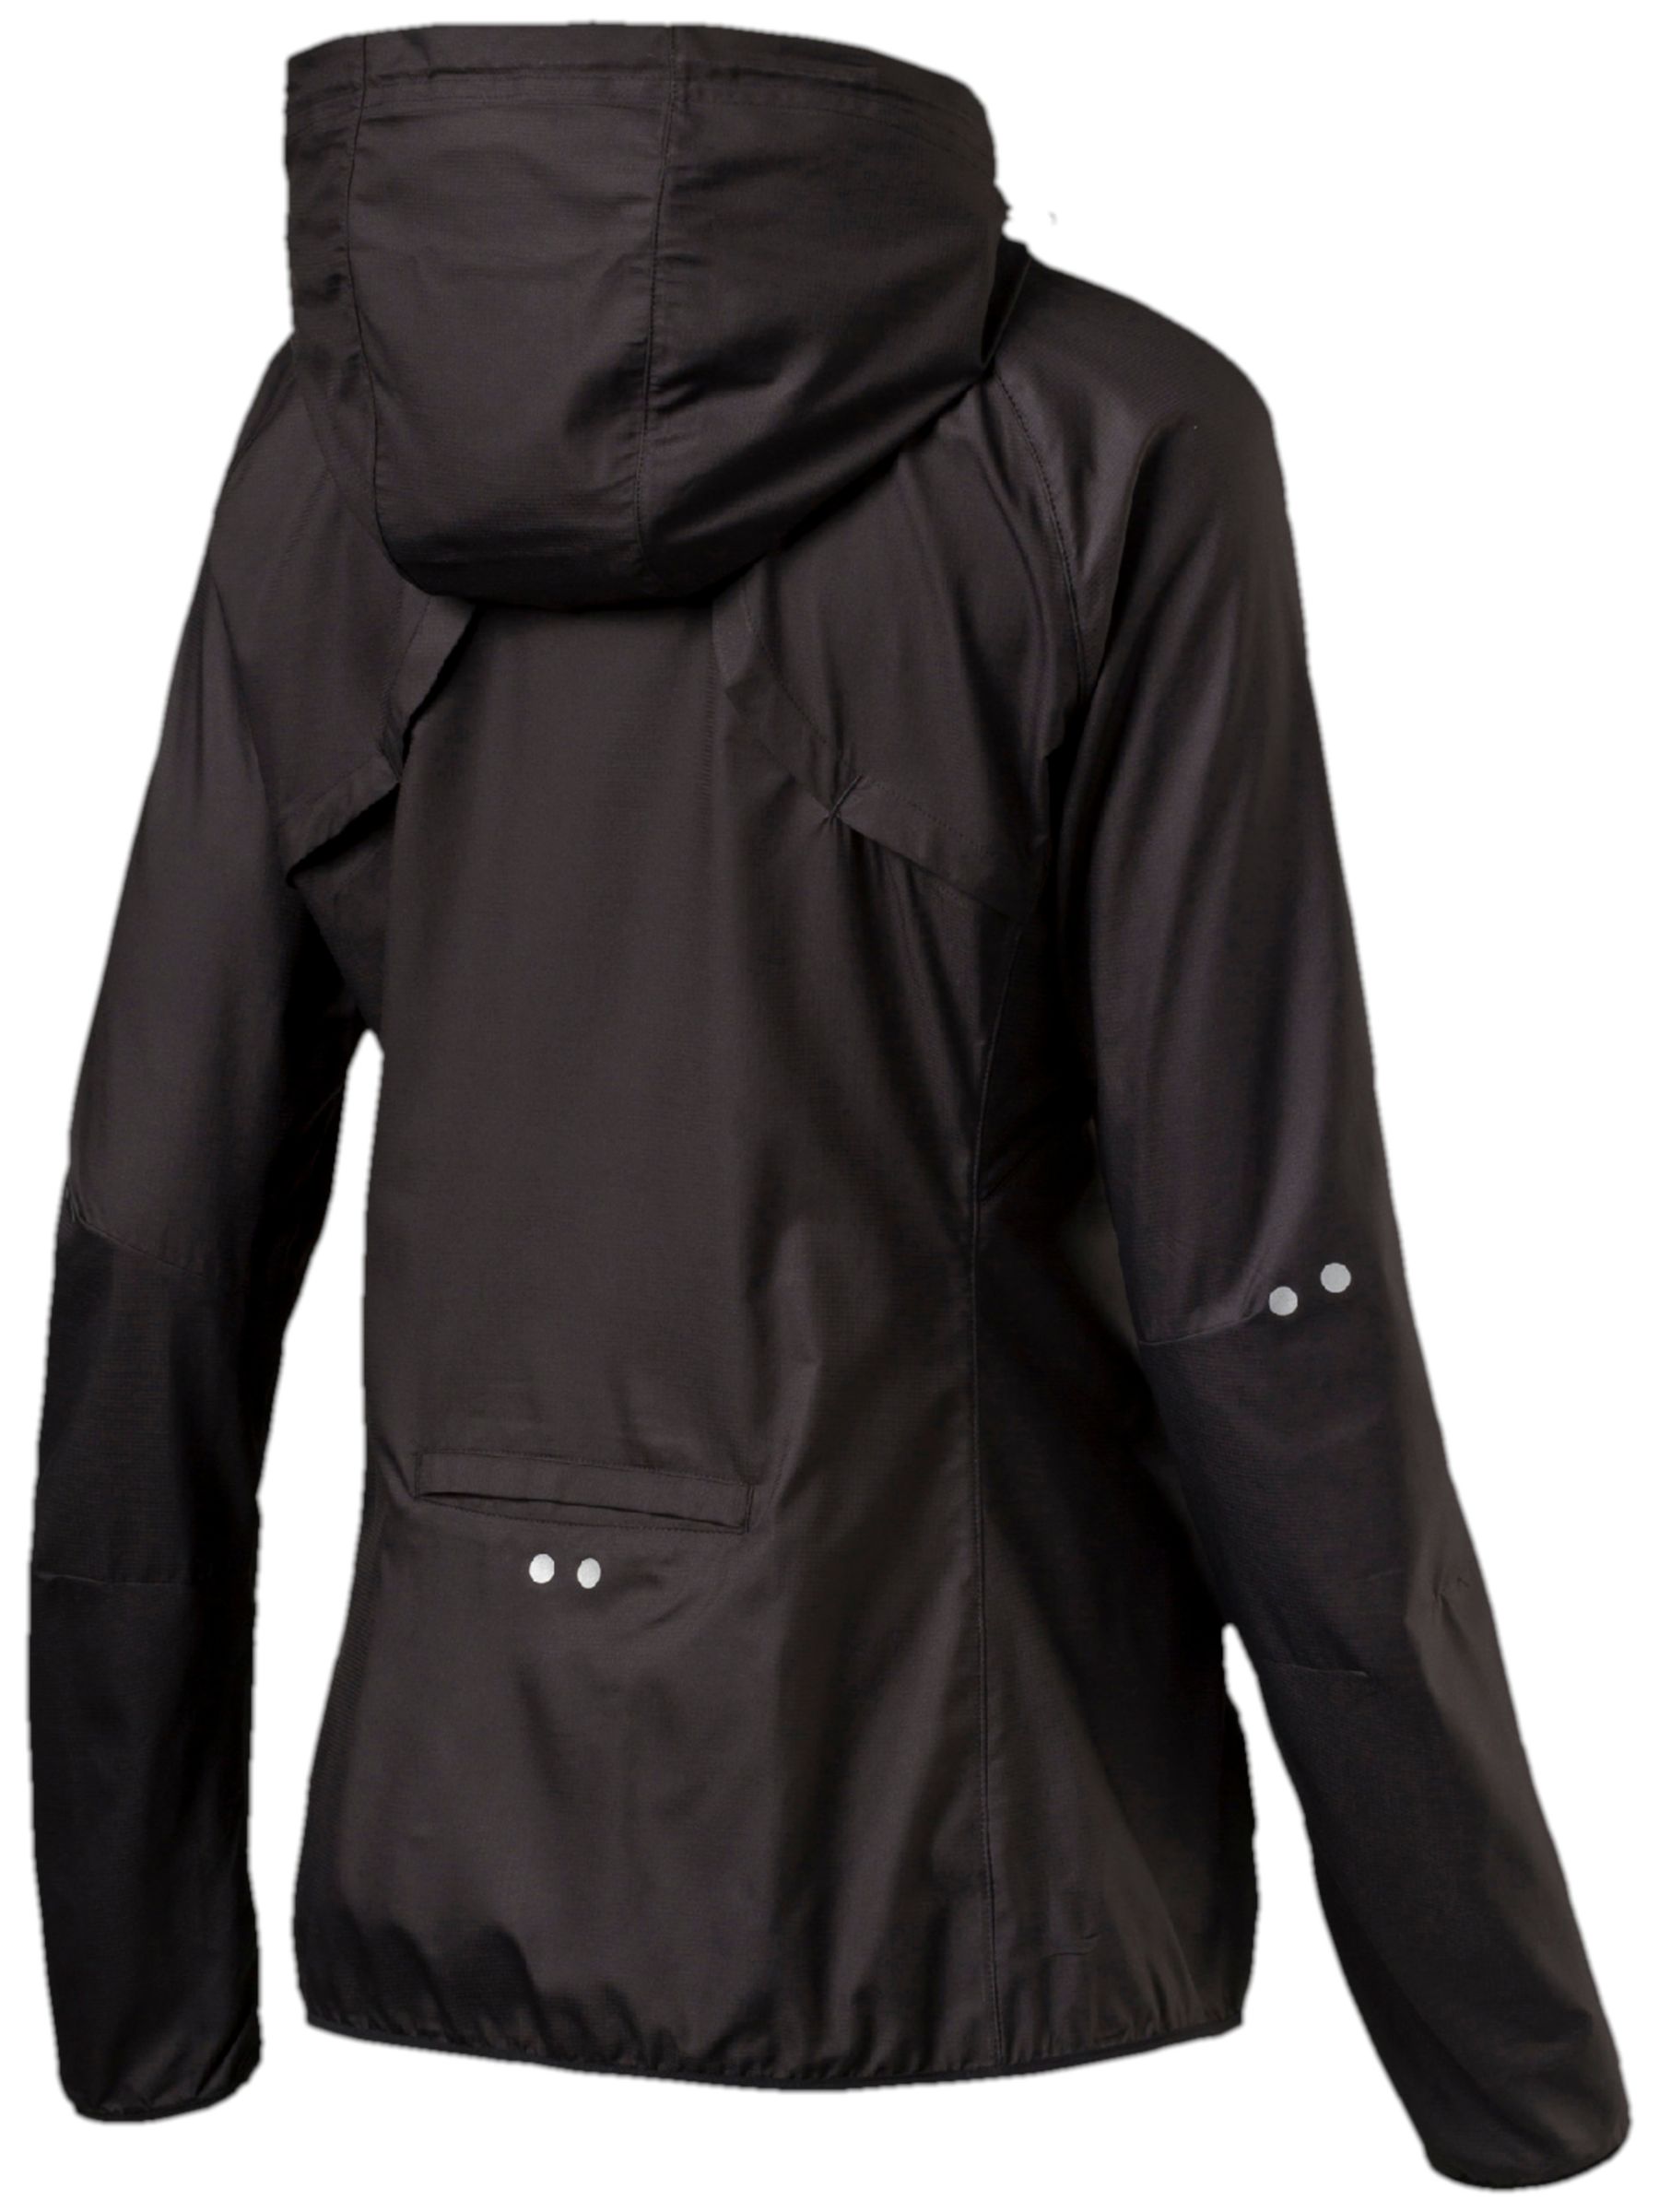 puma packable hooded jacket